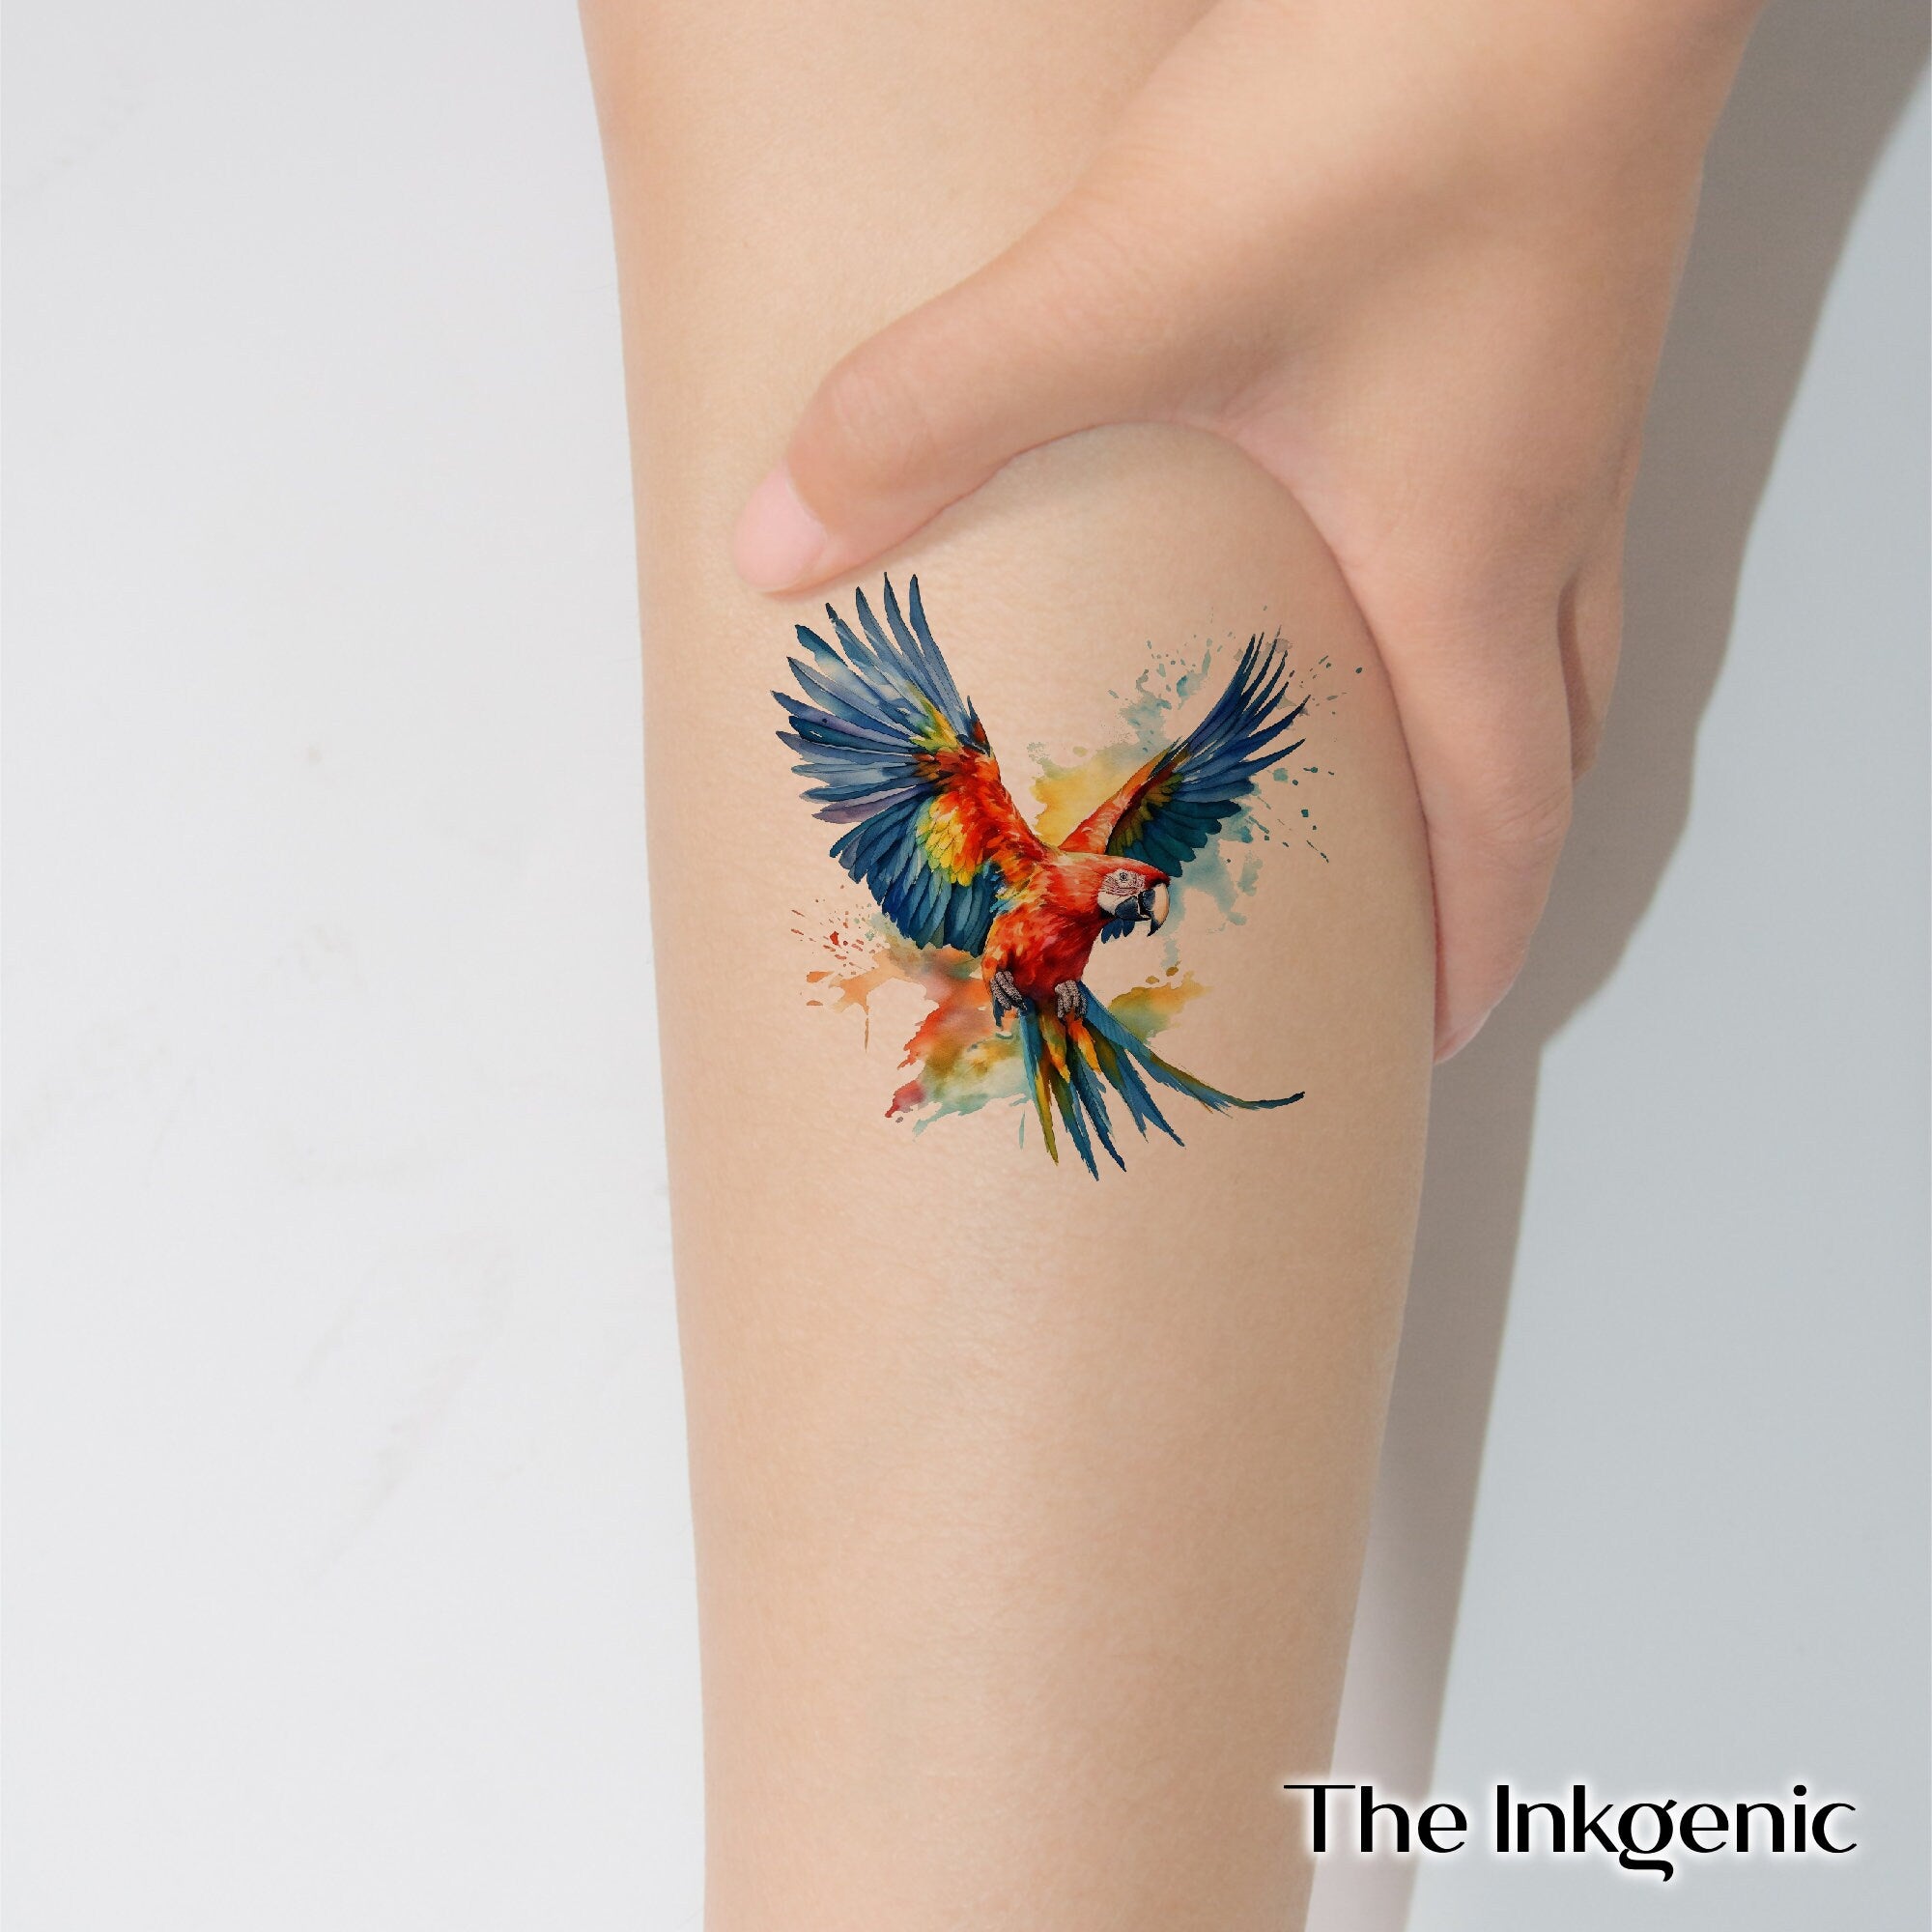 Forearm Tattoo Parrot - Best Tattoo Ideas Gallery